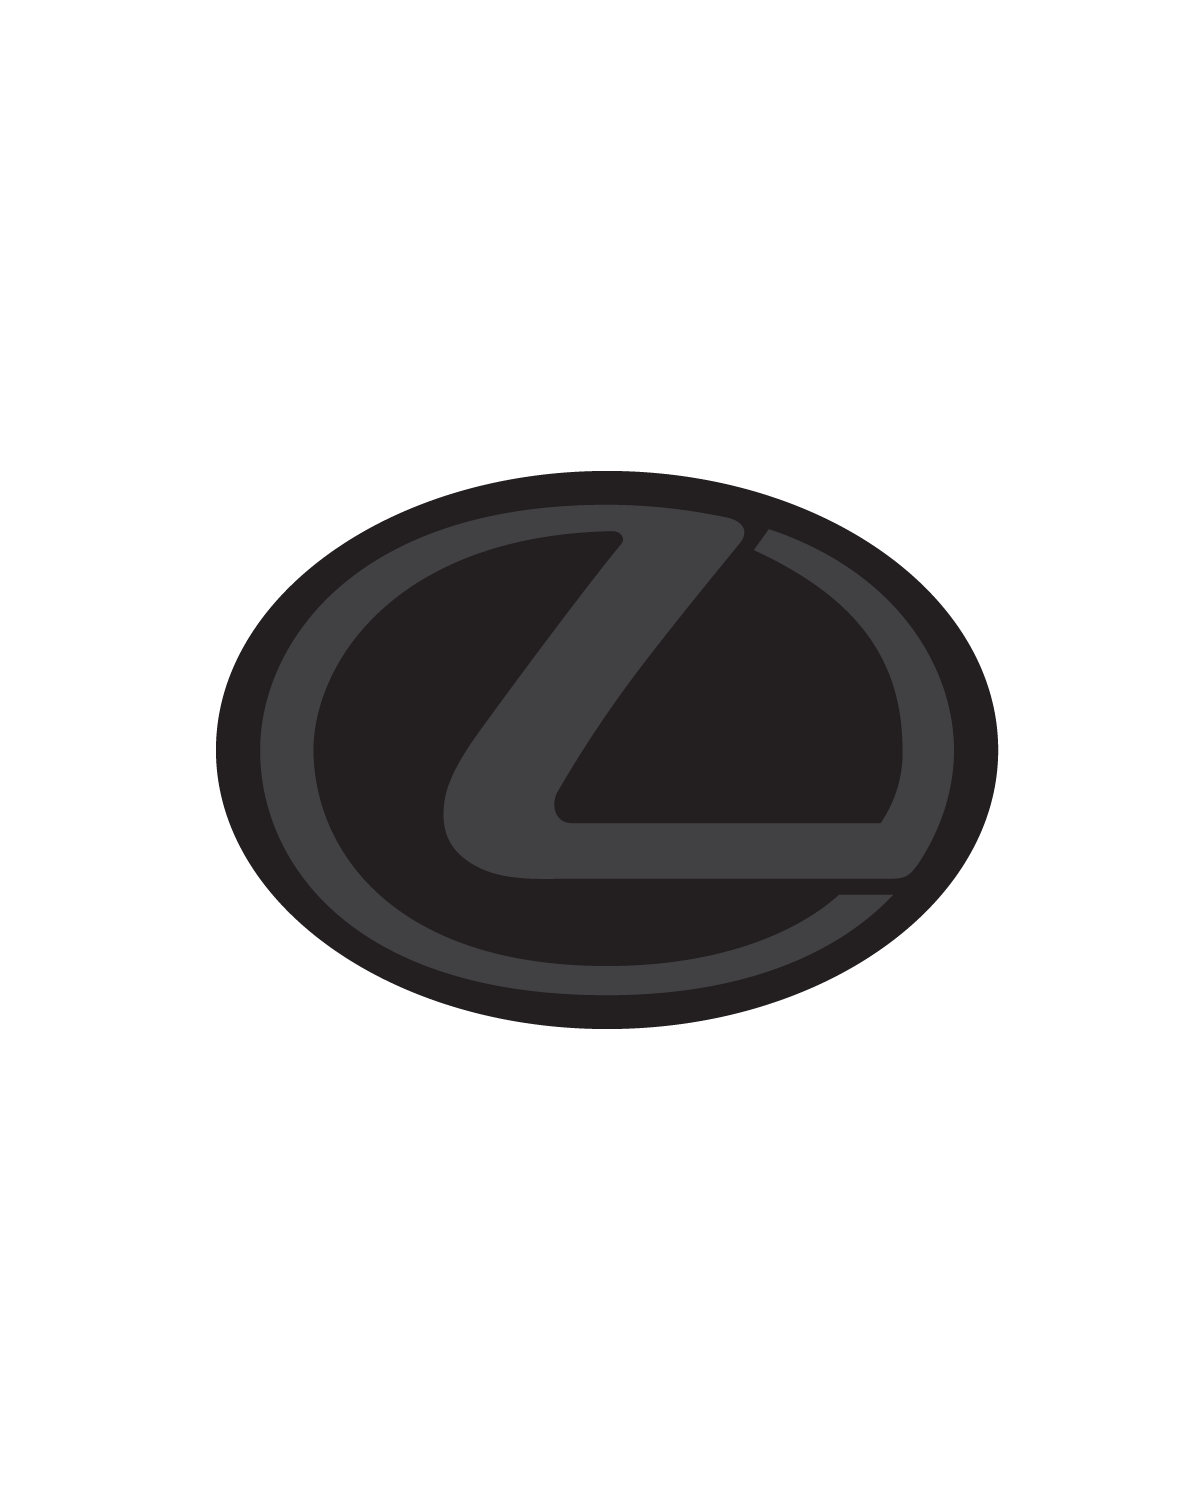 lexus logo black